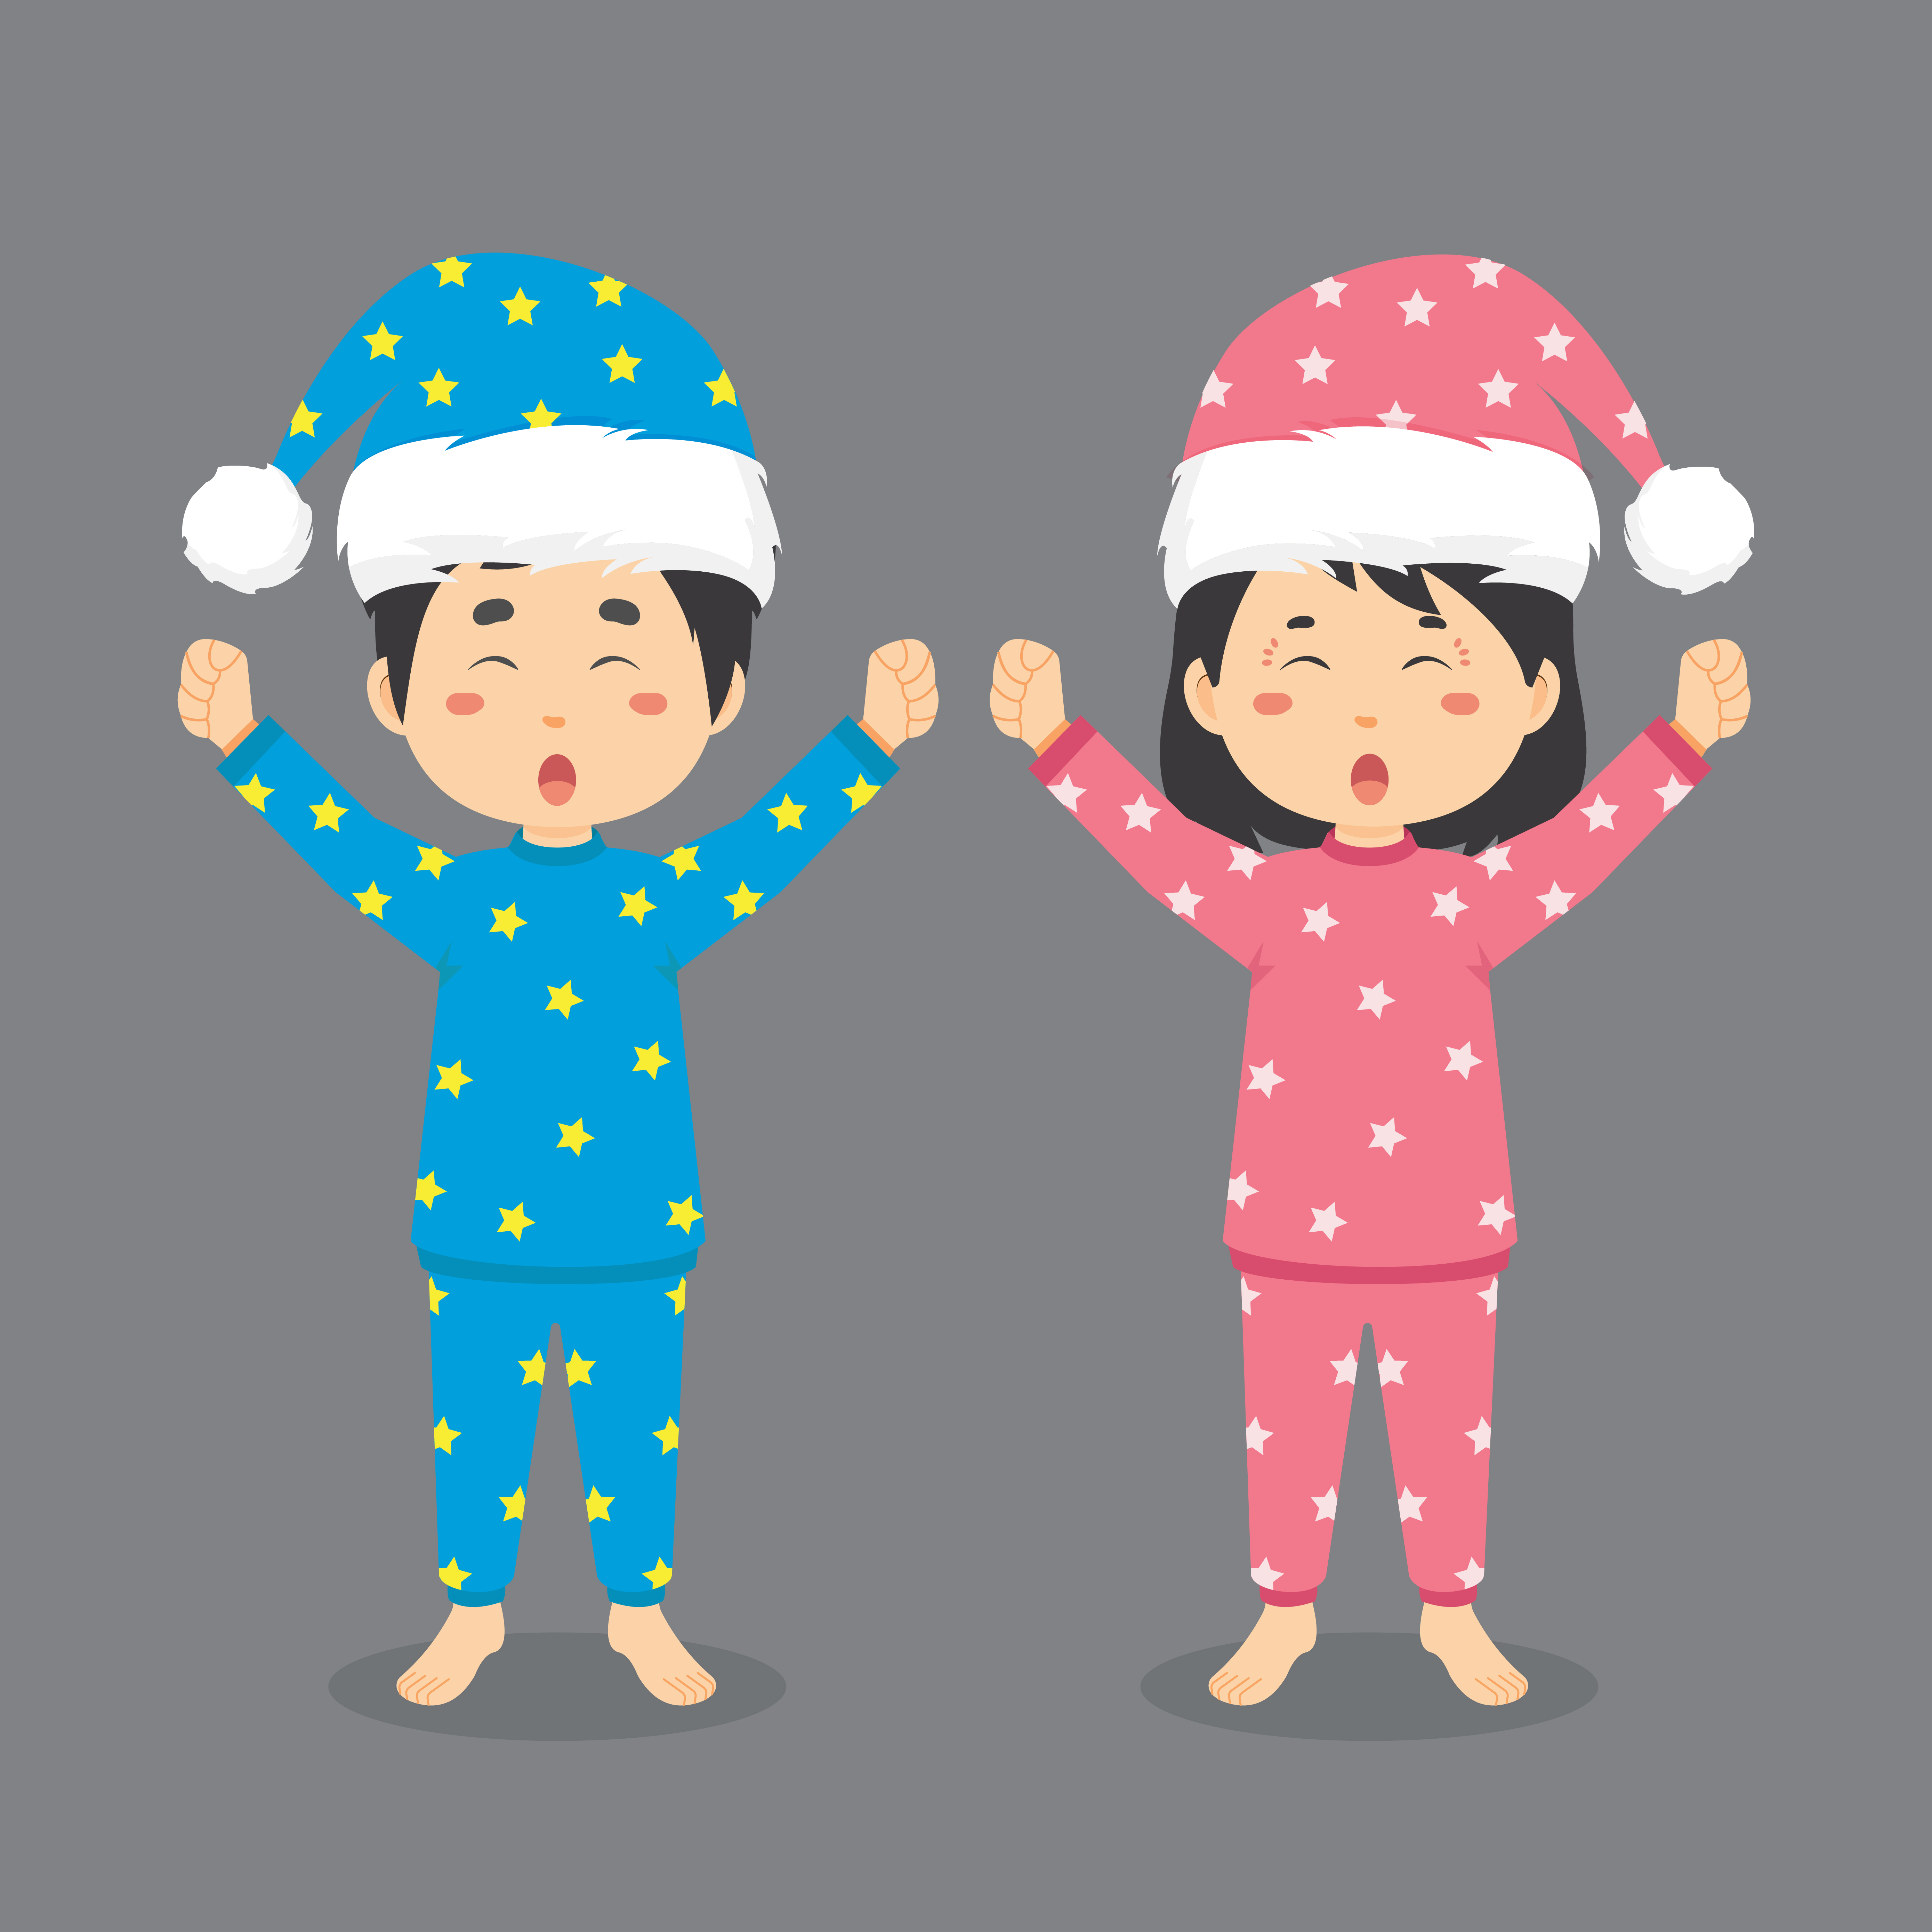 Christmas Pajamas Vector Art, Icons, and Graphics for Free D